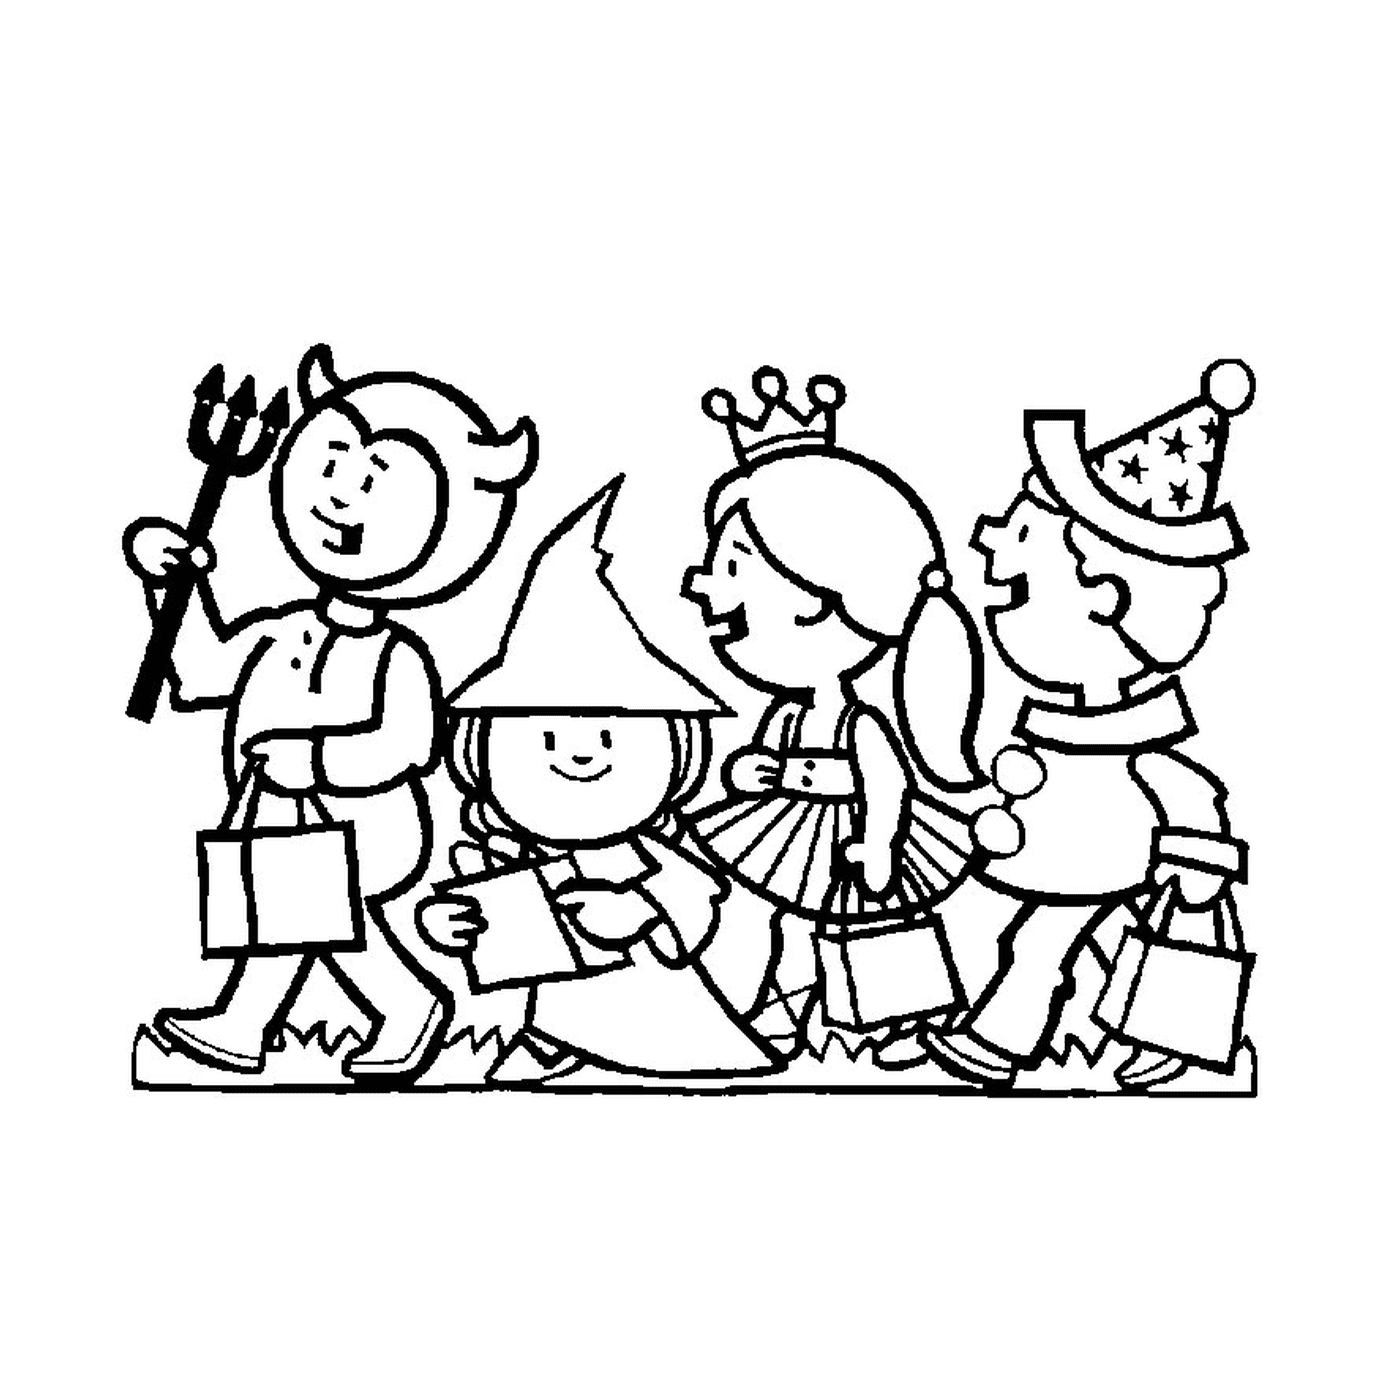  Gruppo di bambini in costume 